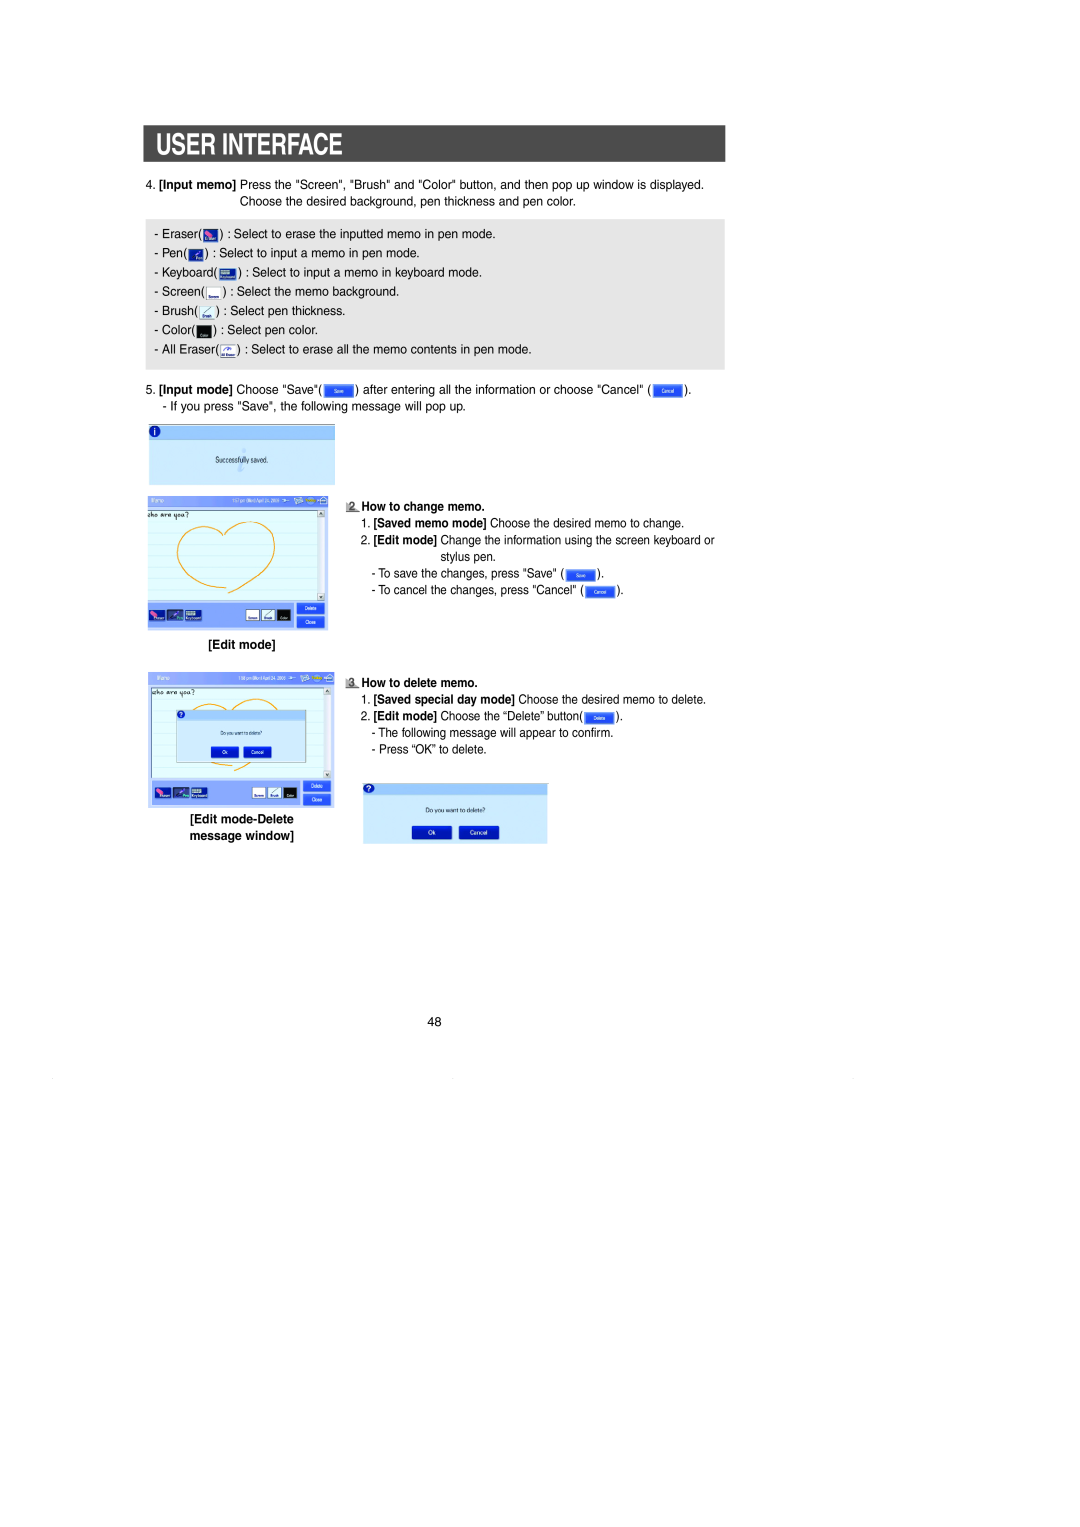 Samsung RH269LBSH User Interface, How to change memo, Edit mode How to delete memo, Edit mode-Deletemessage window 